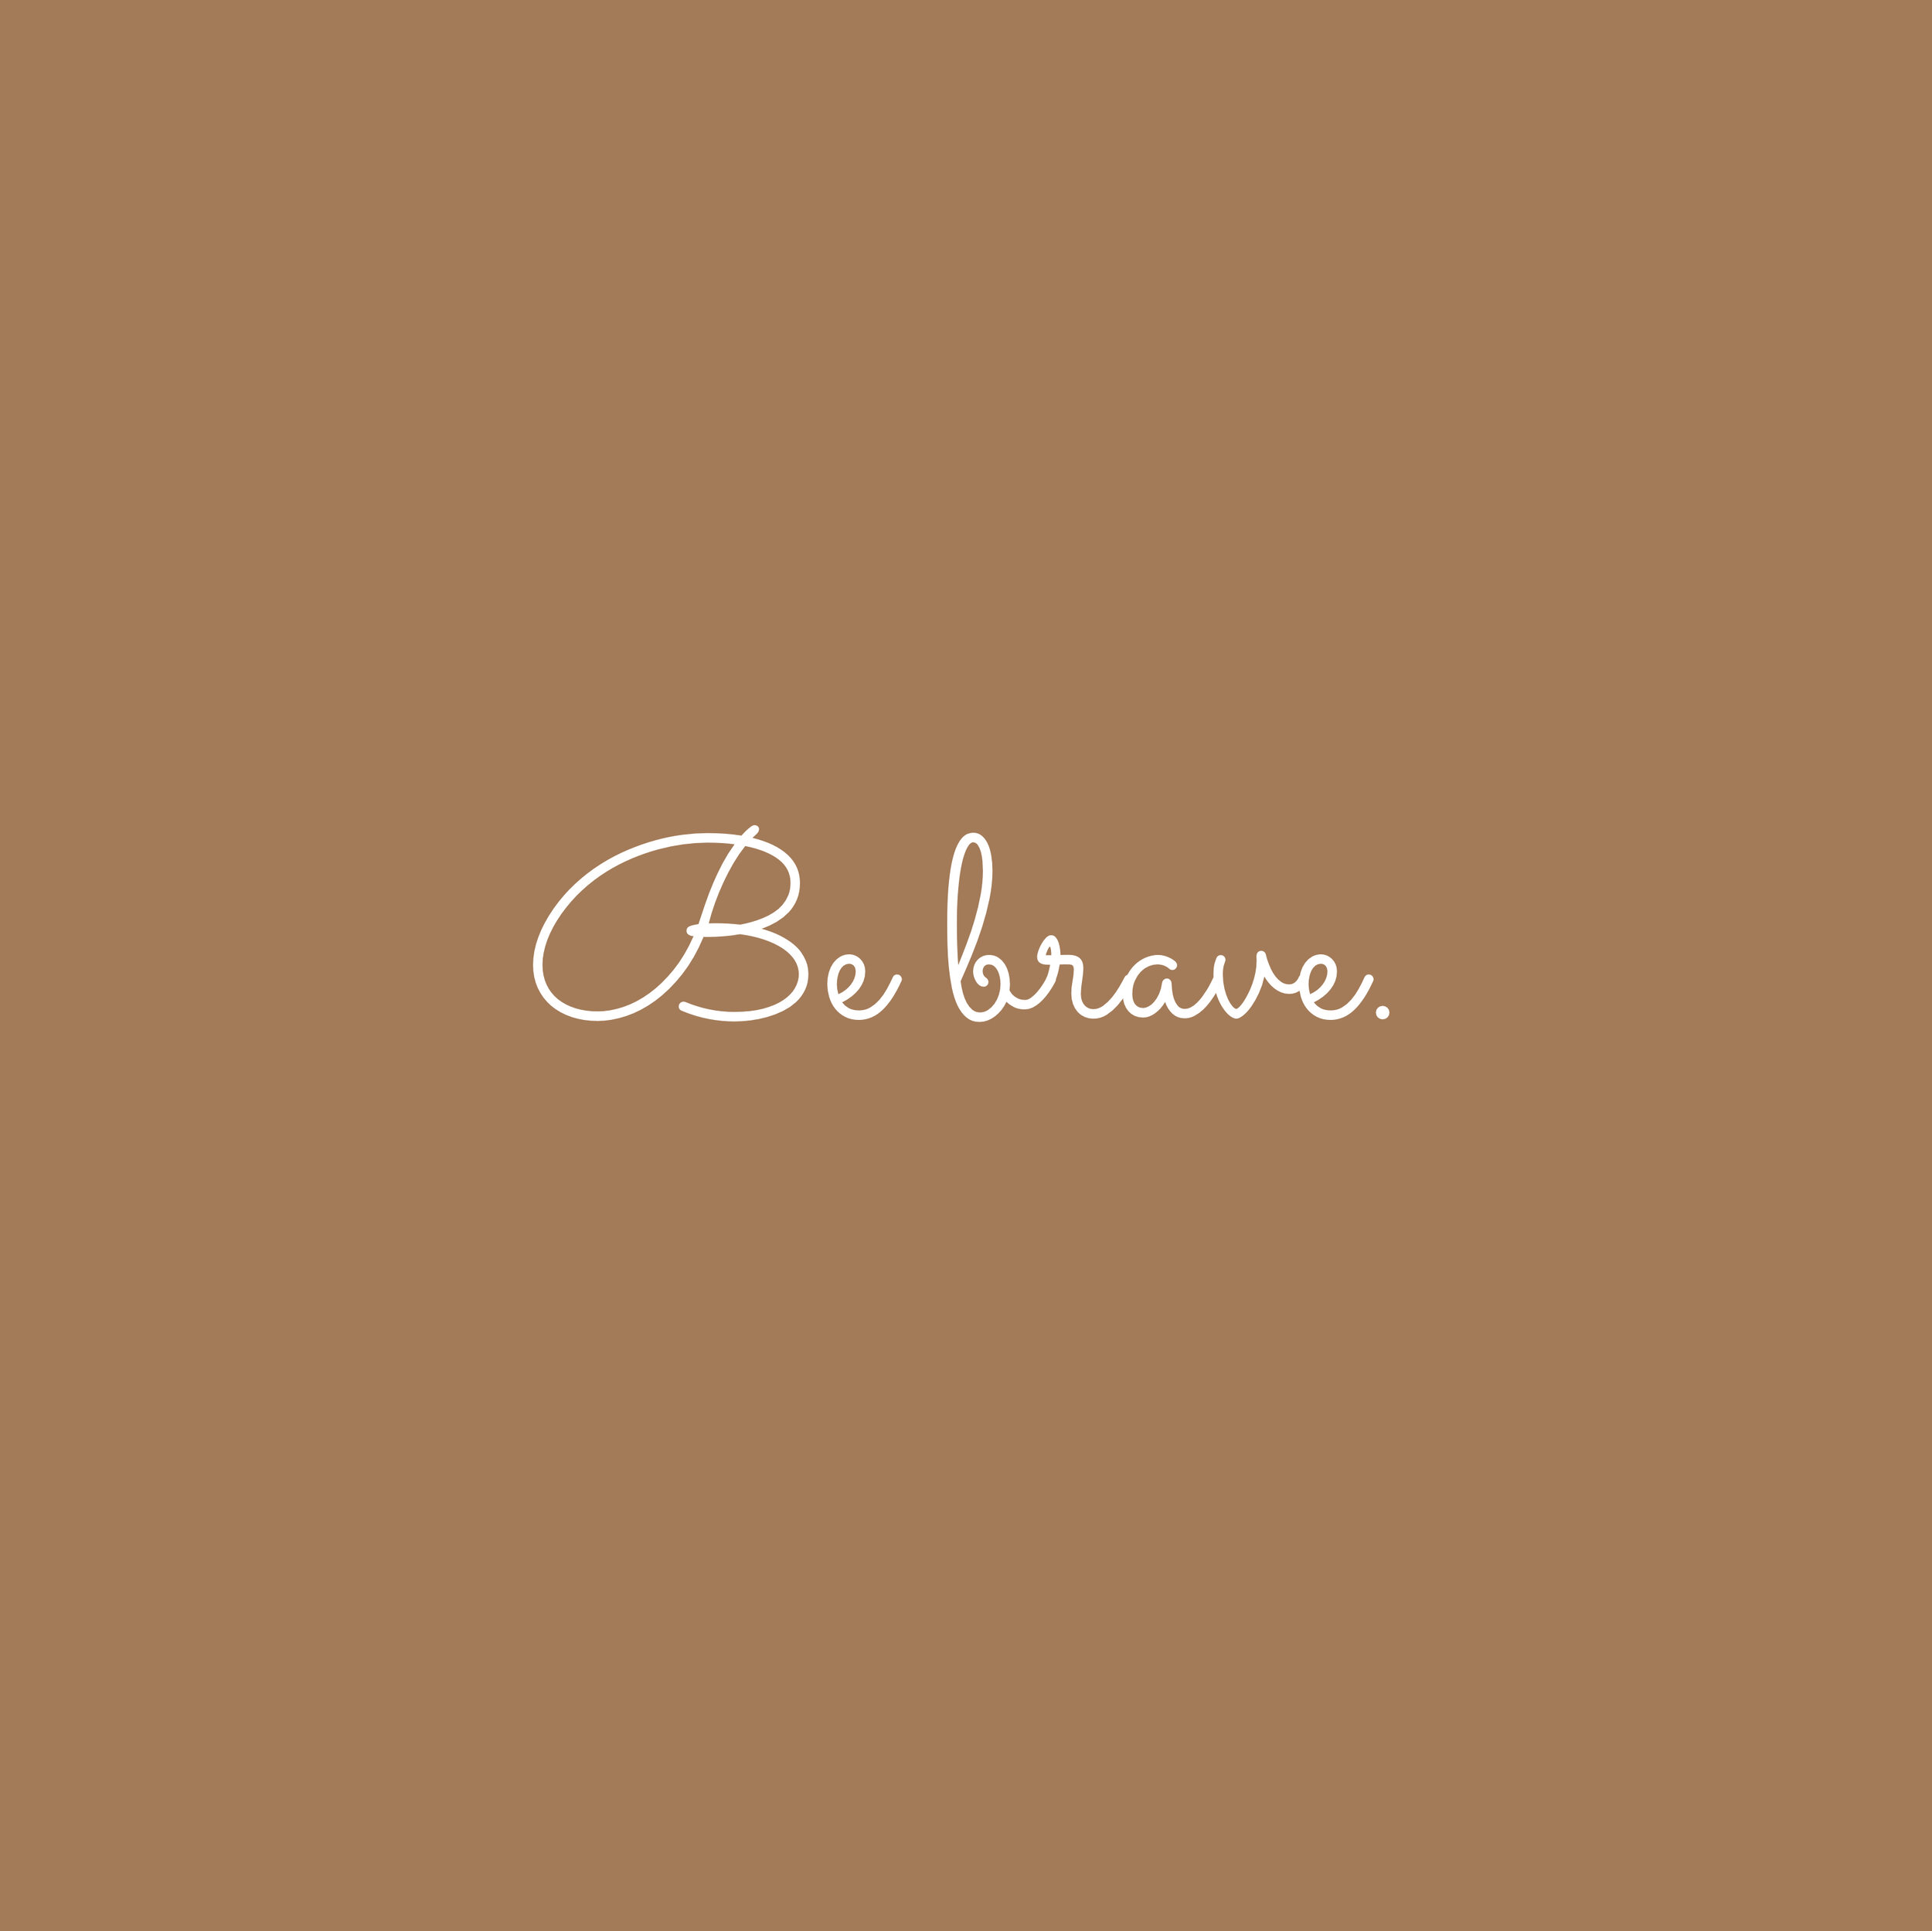 Be brave.jpg